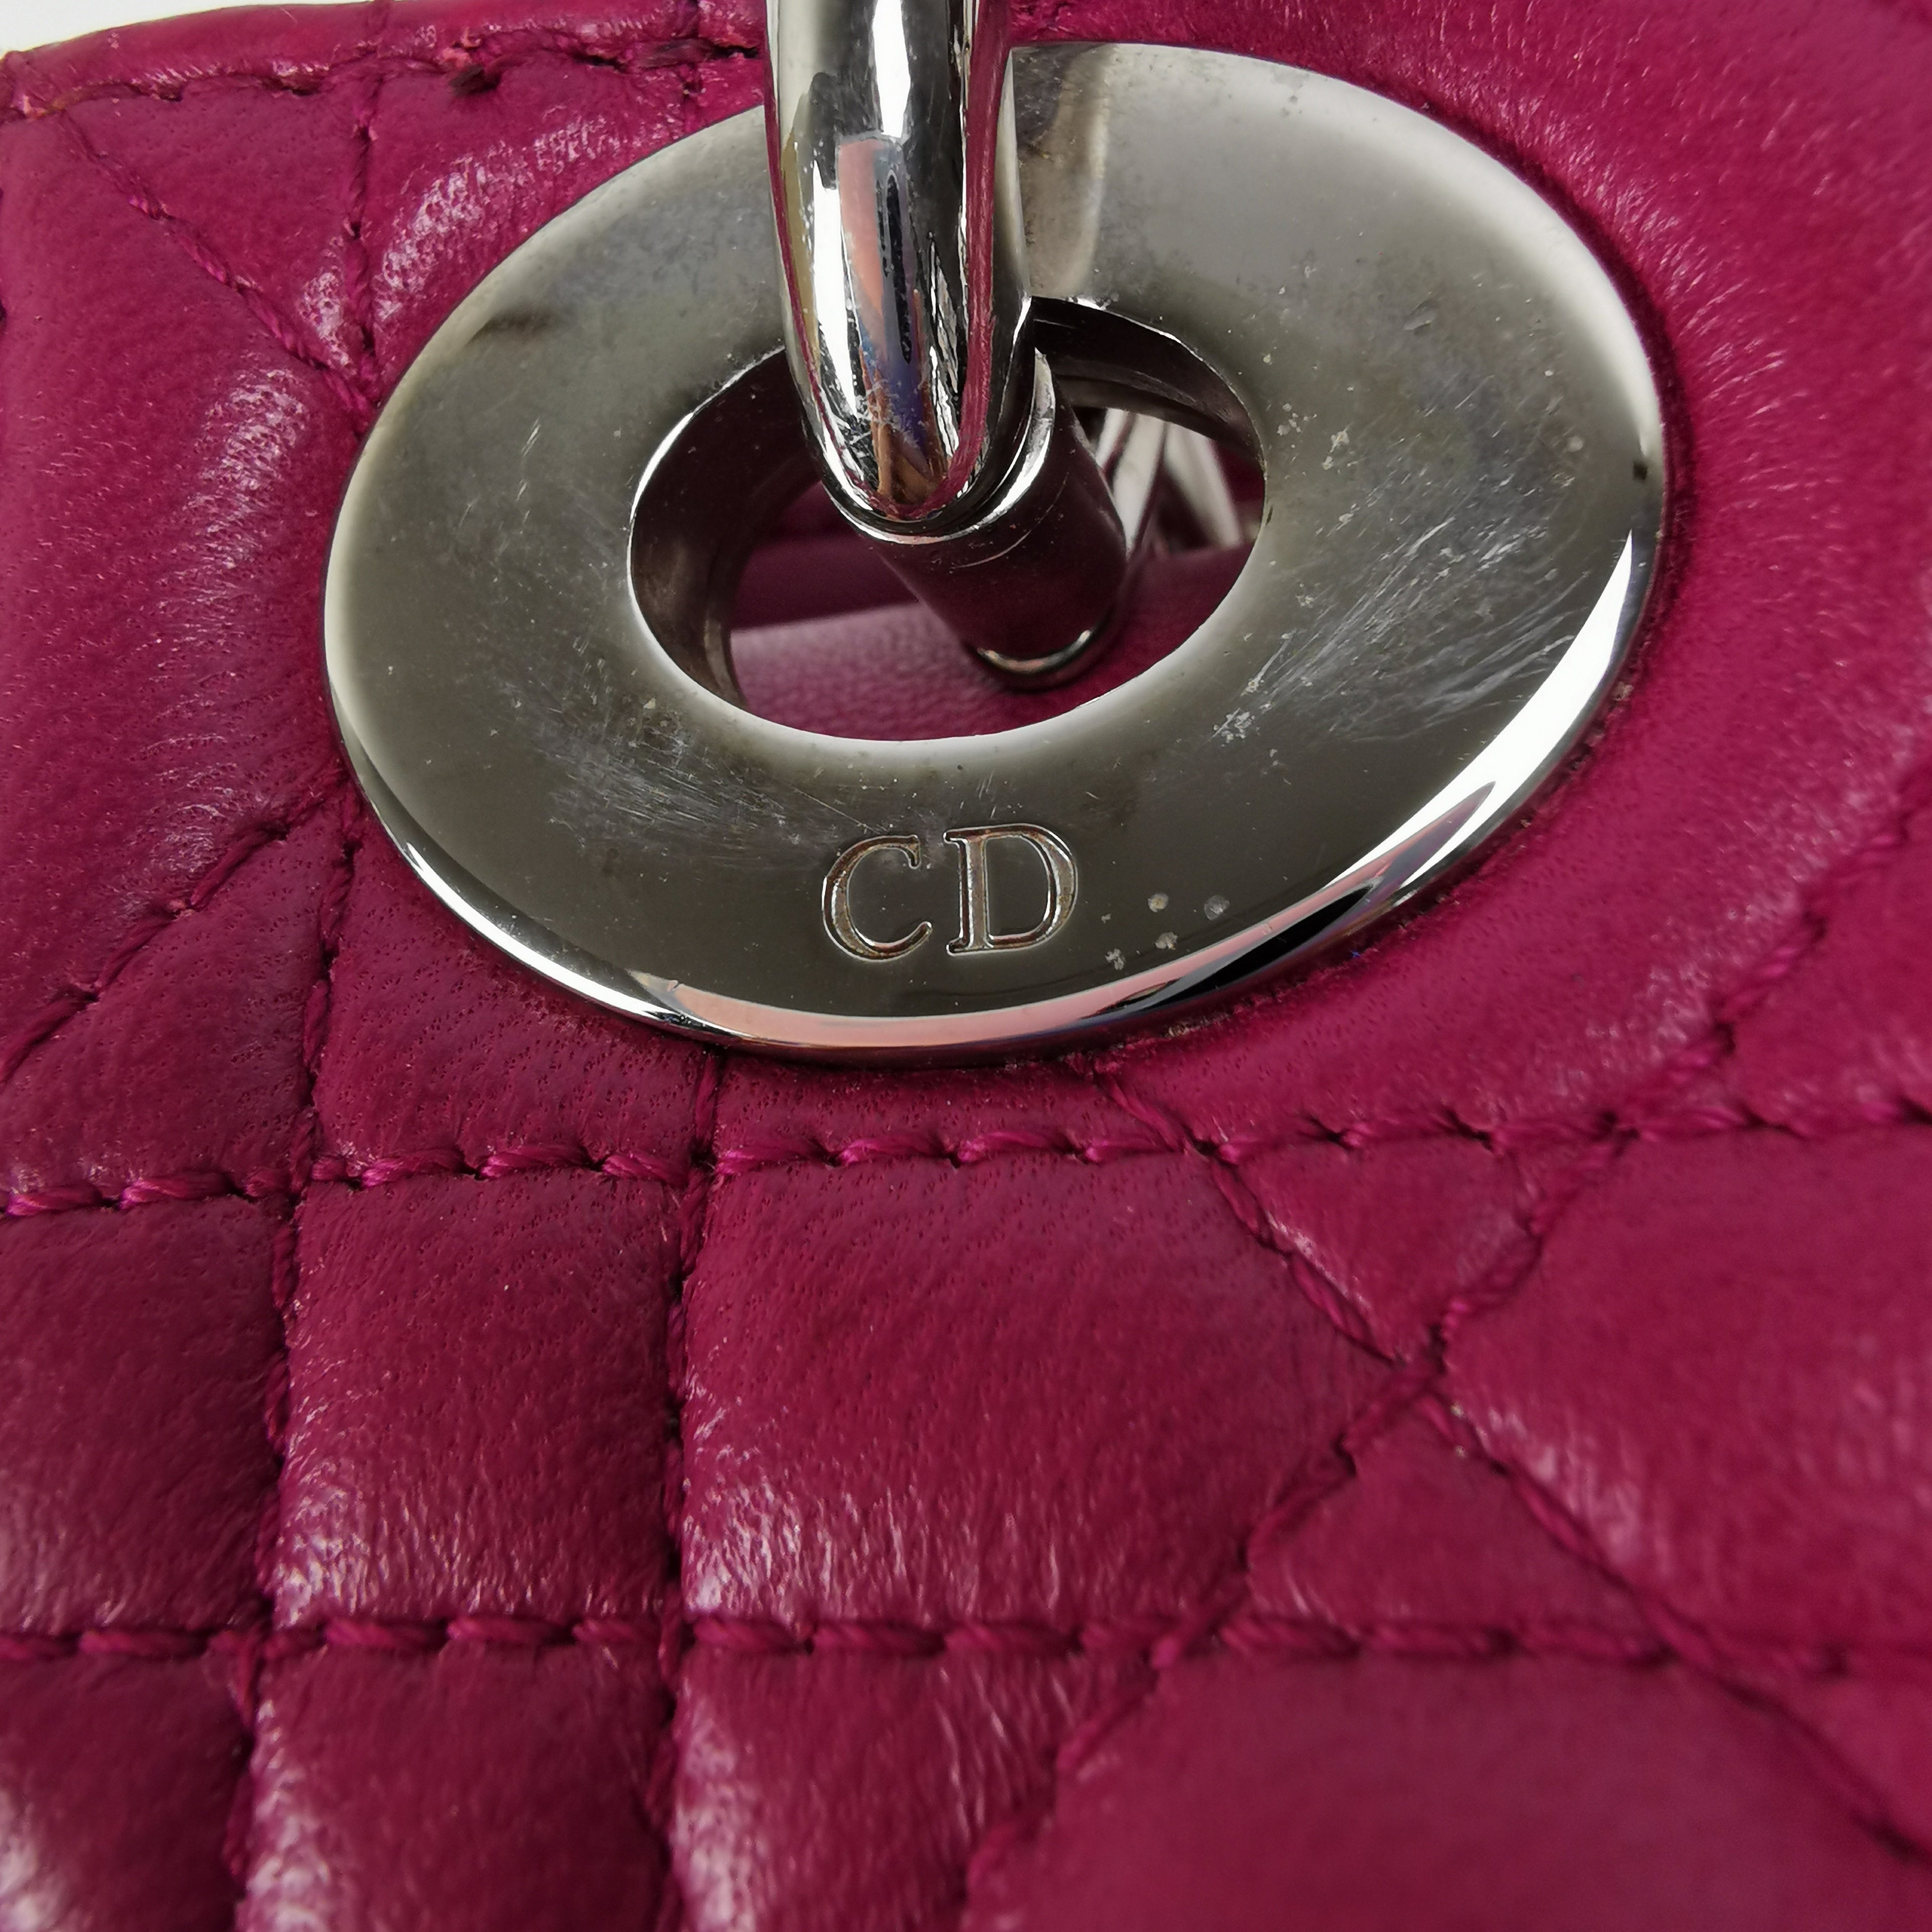 Mini Lady Dior Bag Antique Pink Cannage Lambskin